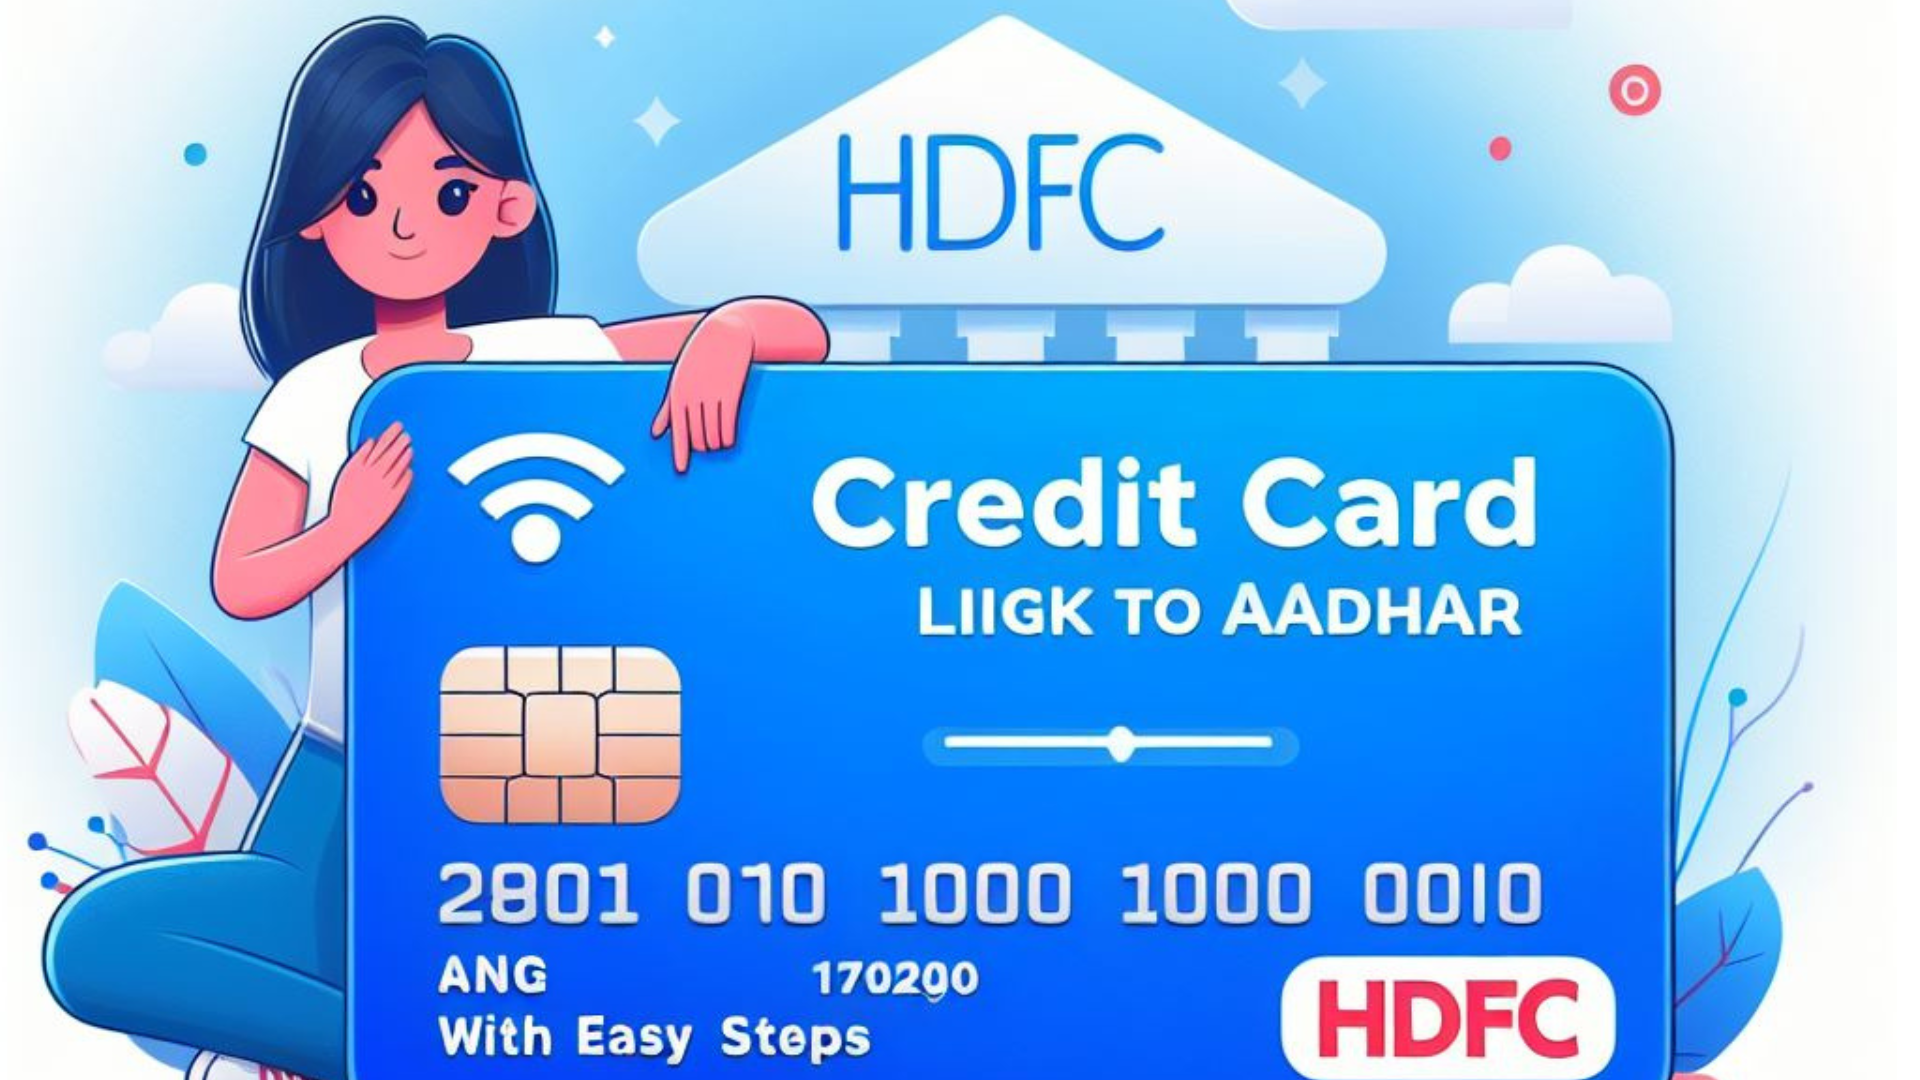 HDFC Credit Card Link To Aadhar